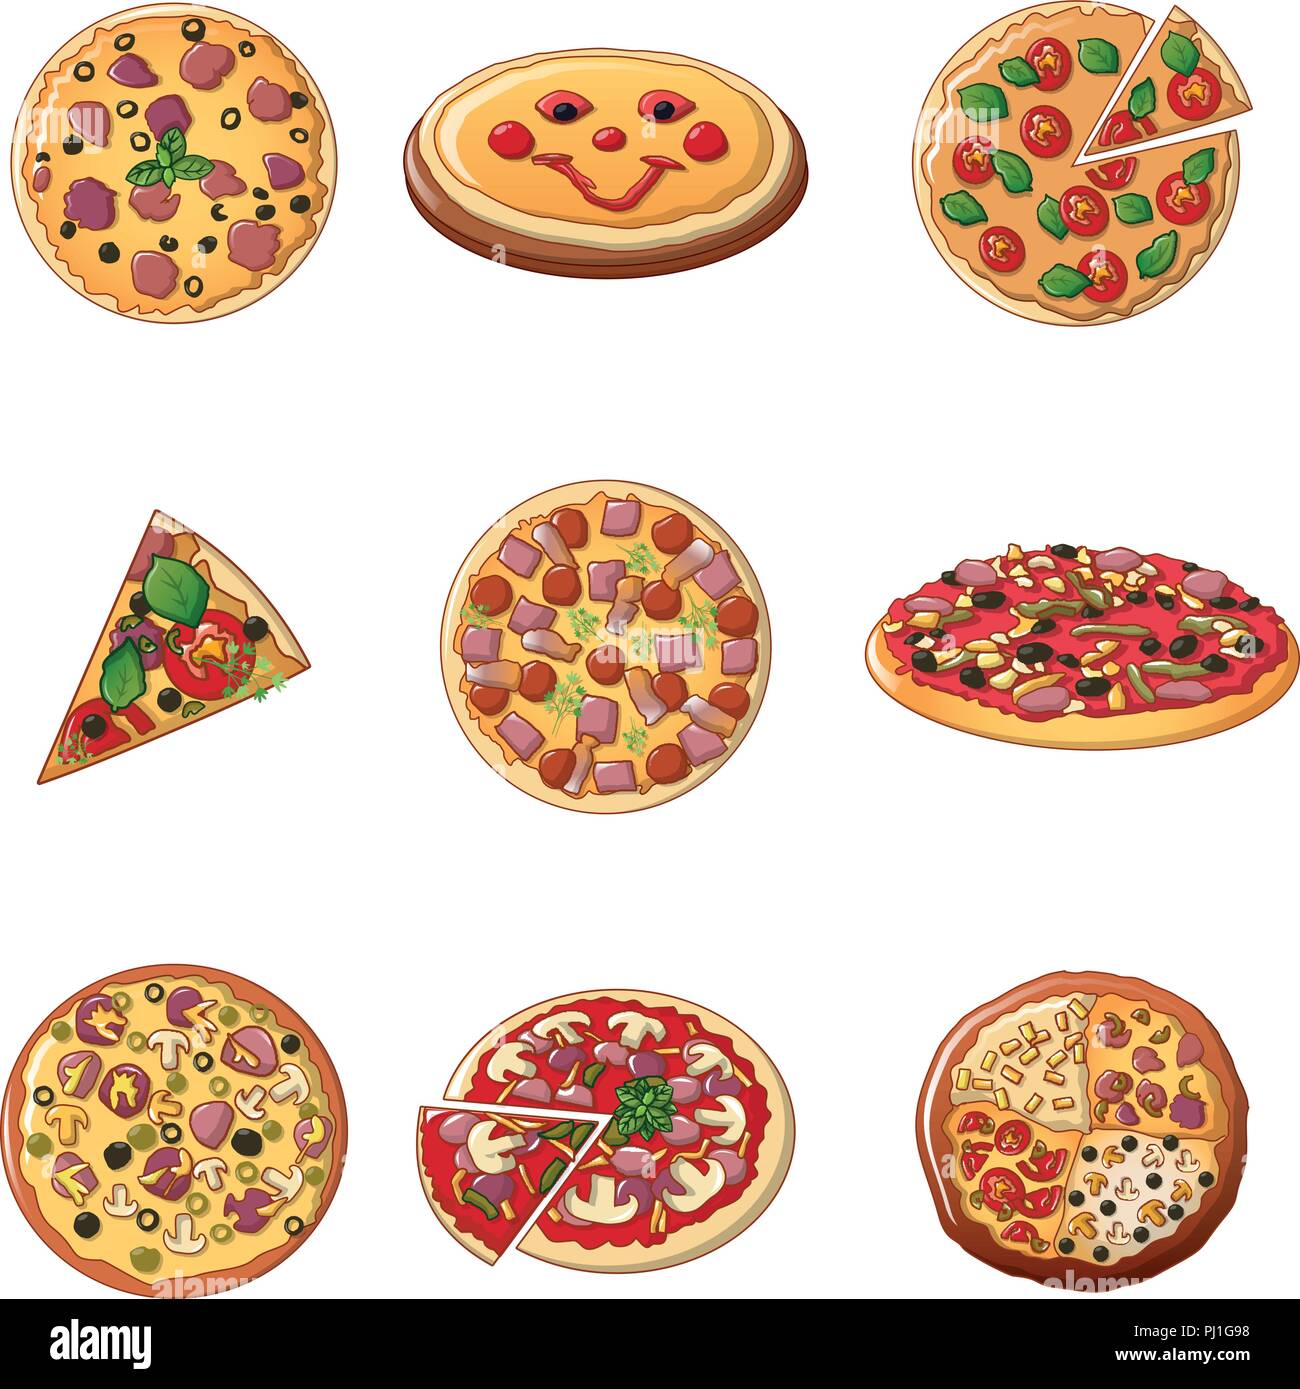 Pizza Cartoon Stock Photos & Pizza Cartoon Stock Images - Alamy